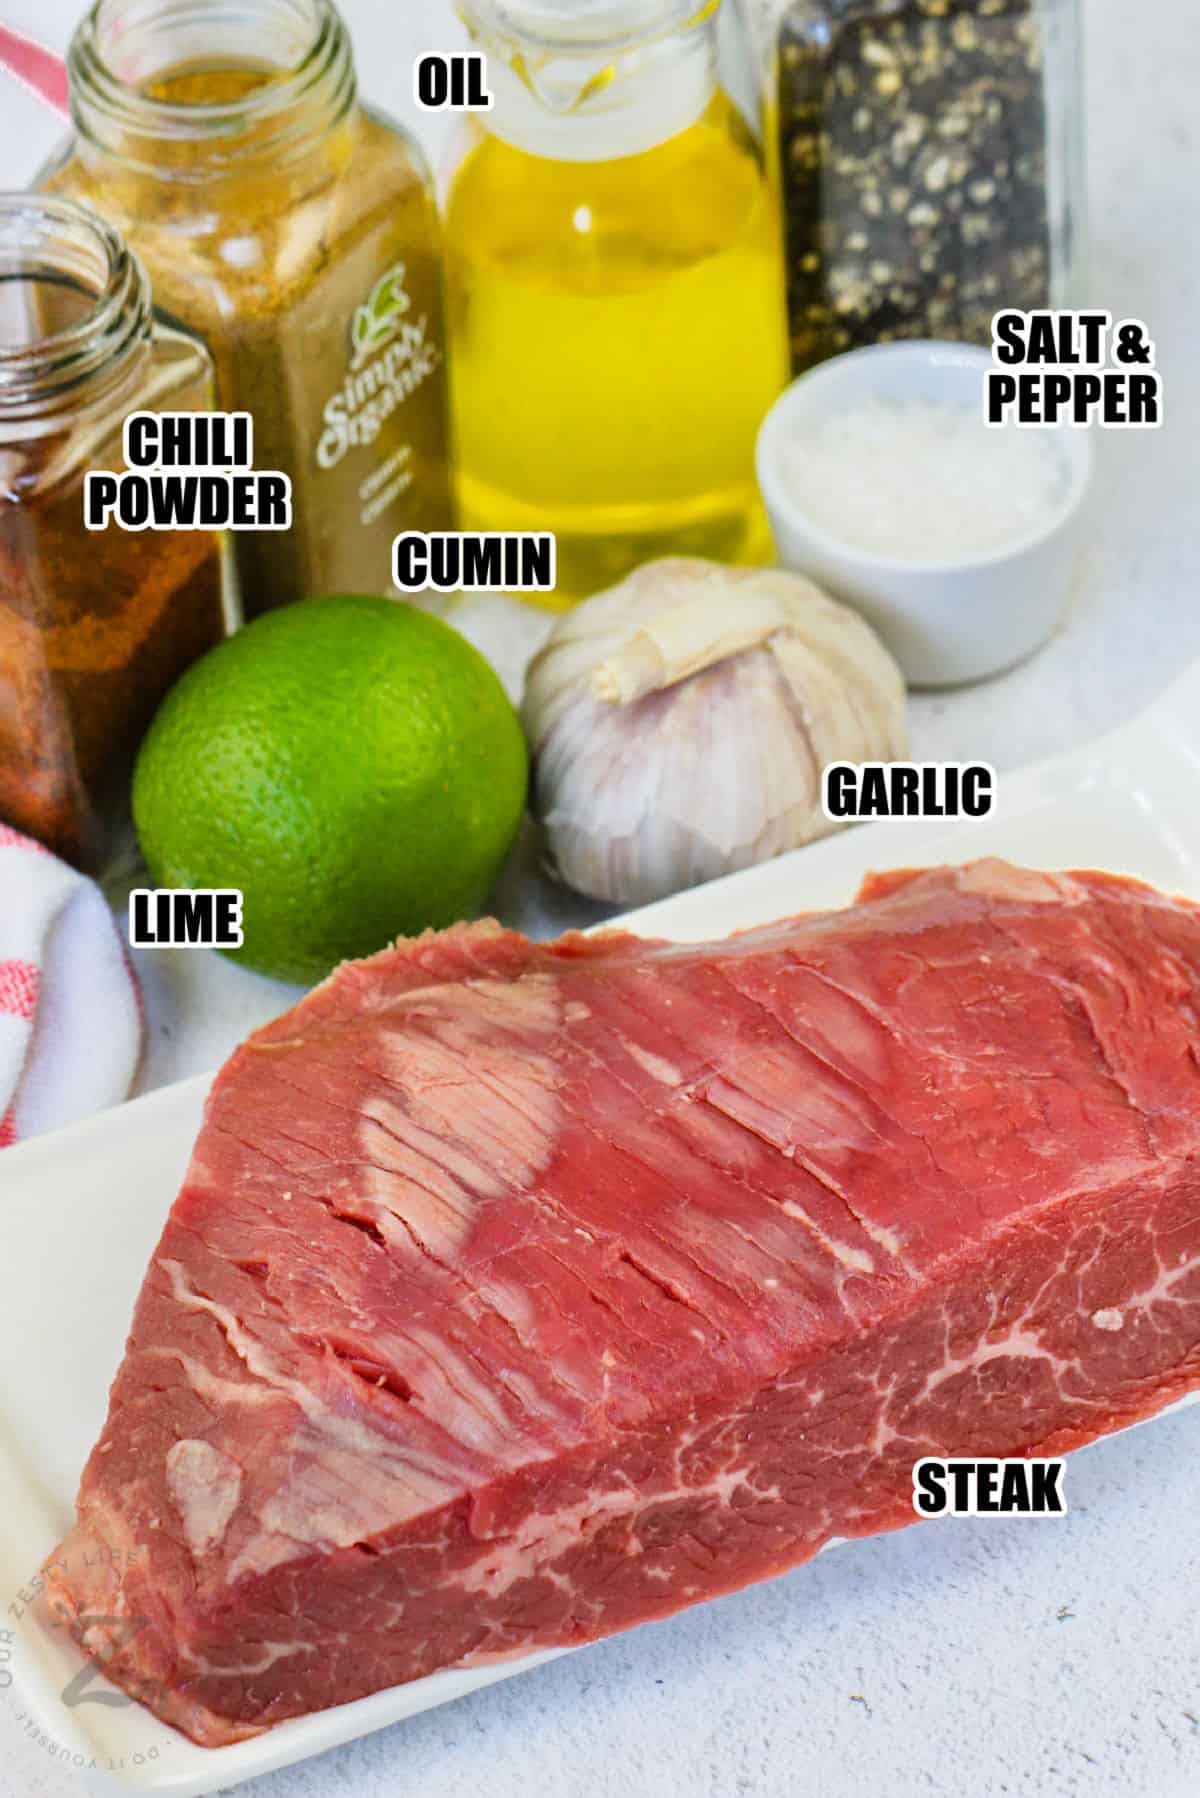 steak, cumin, chili powder, lime, oil to make Grilled Flank Steak